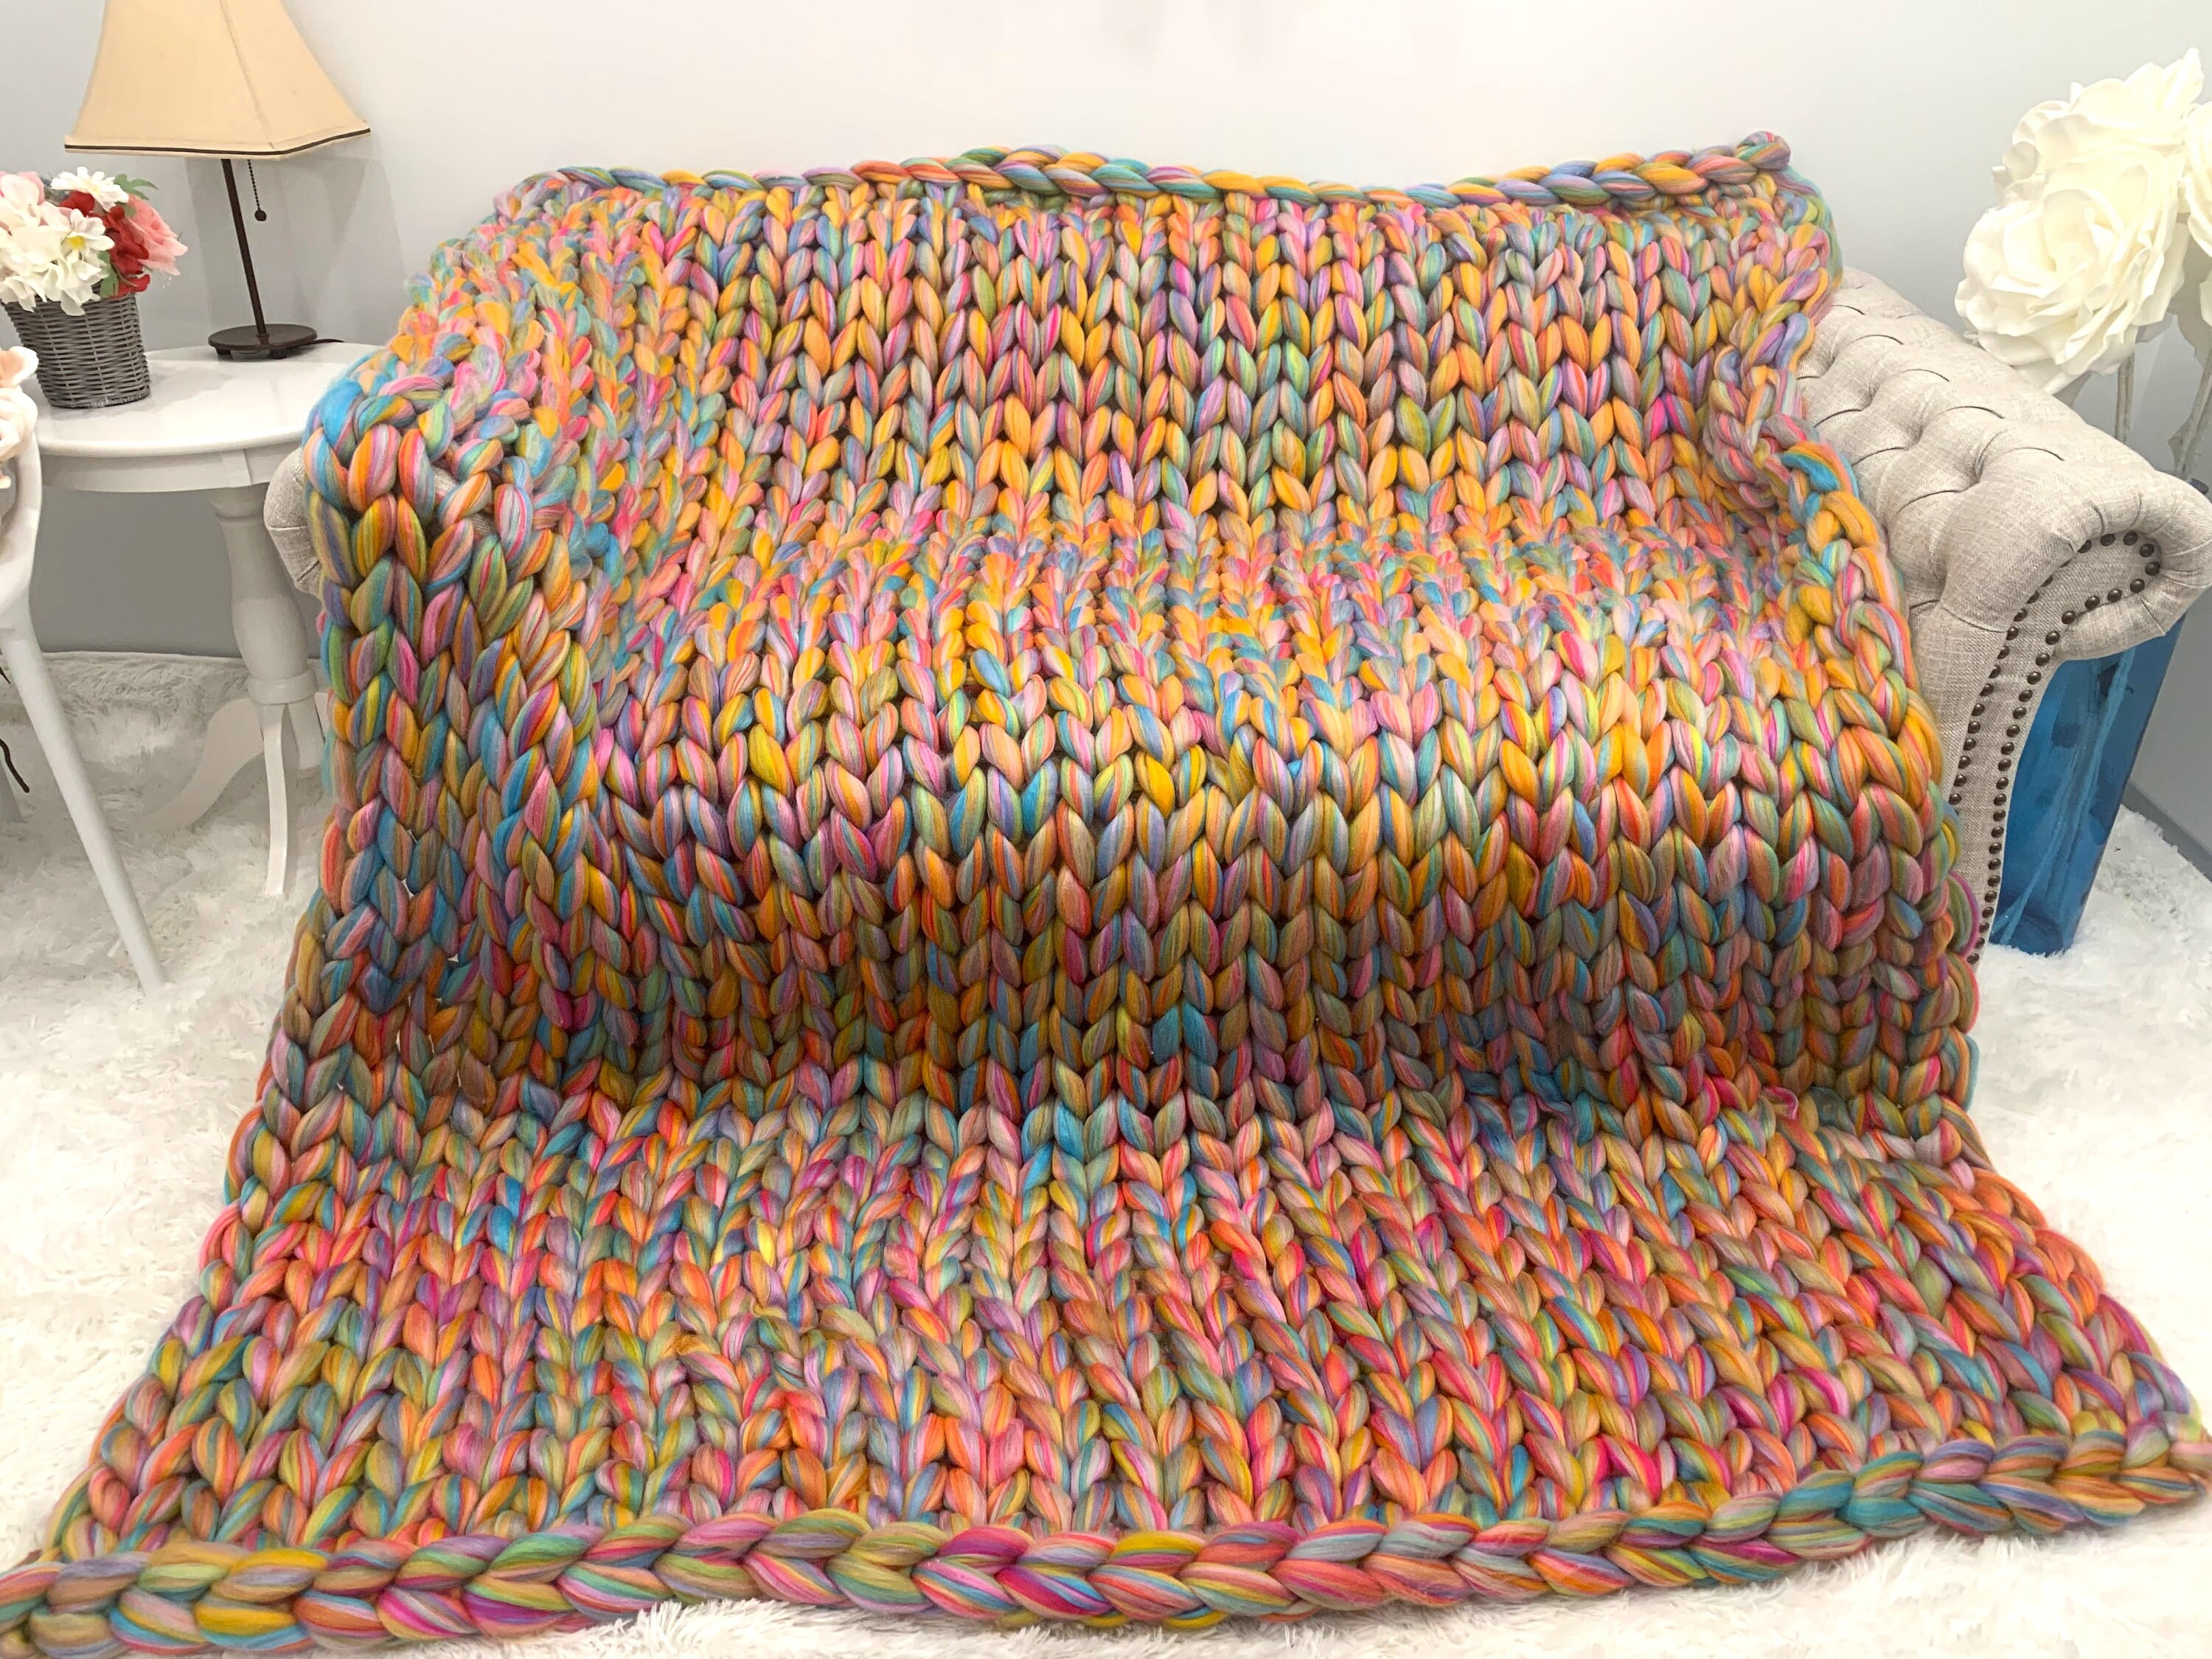 DIY Knit Kit, Hand Knit Kit, Blanket Knit Kit, Video Tutorial for Blanket  40x60, Merino Wool, Birthday Gift 